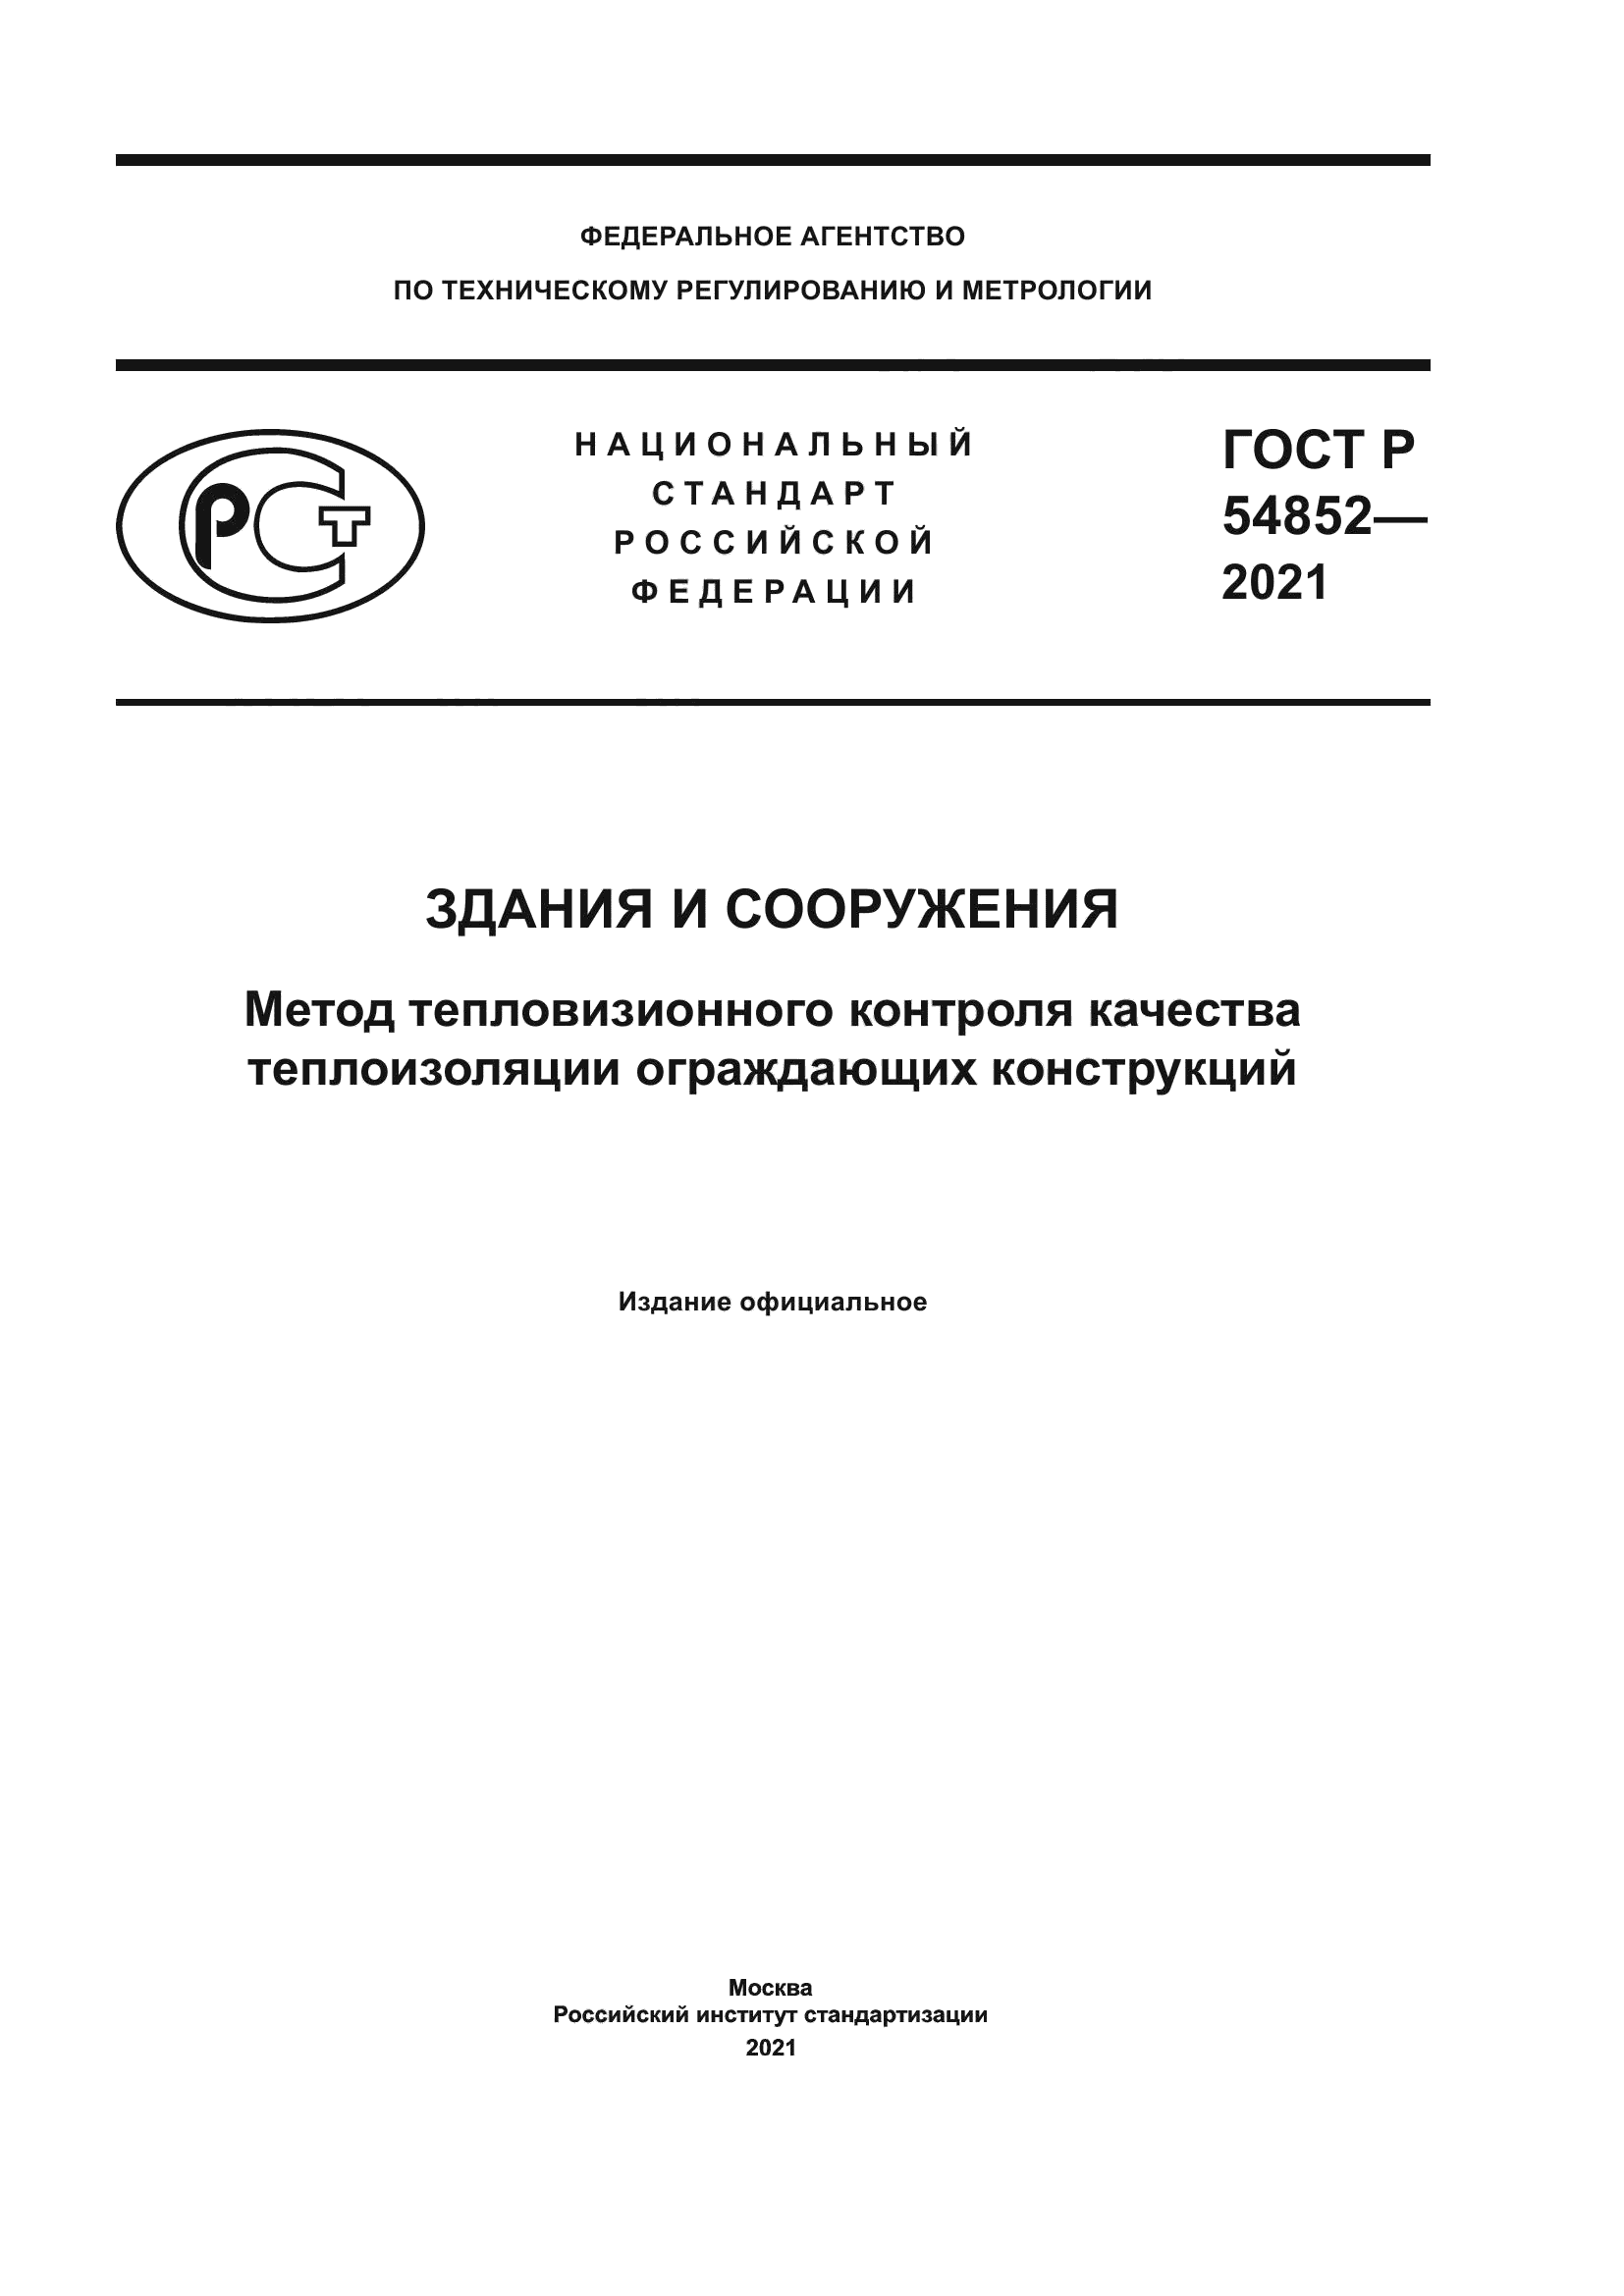 ГОСТ Р 54852-2021